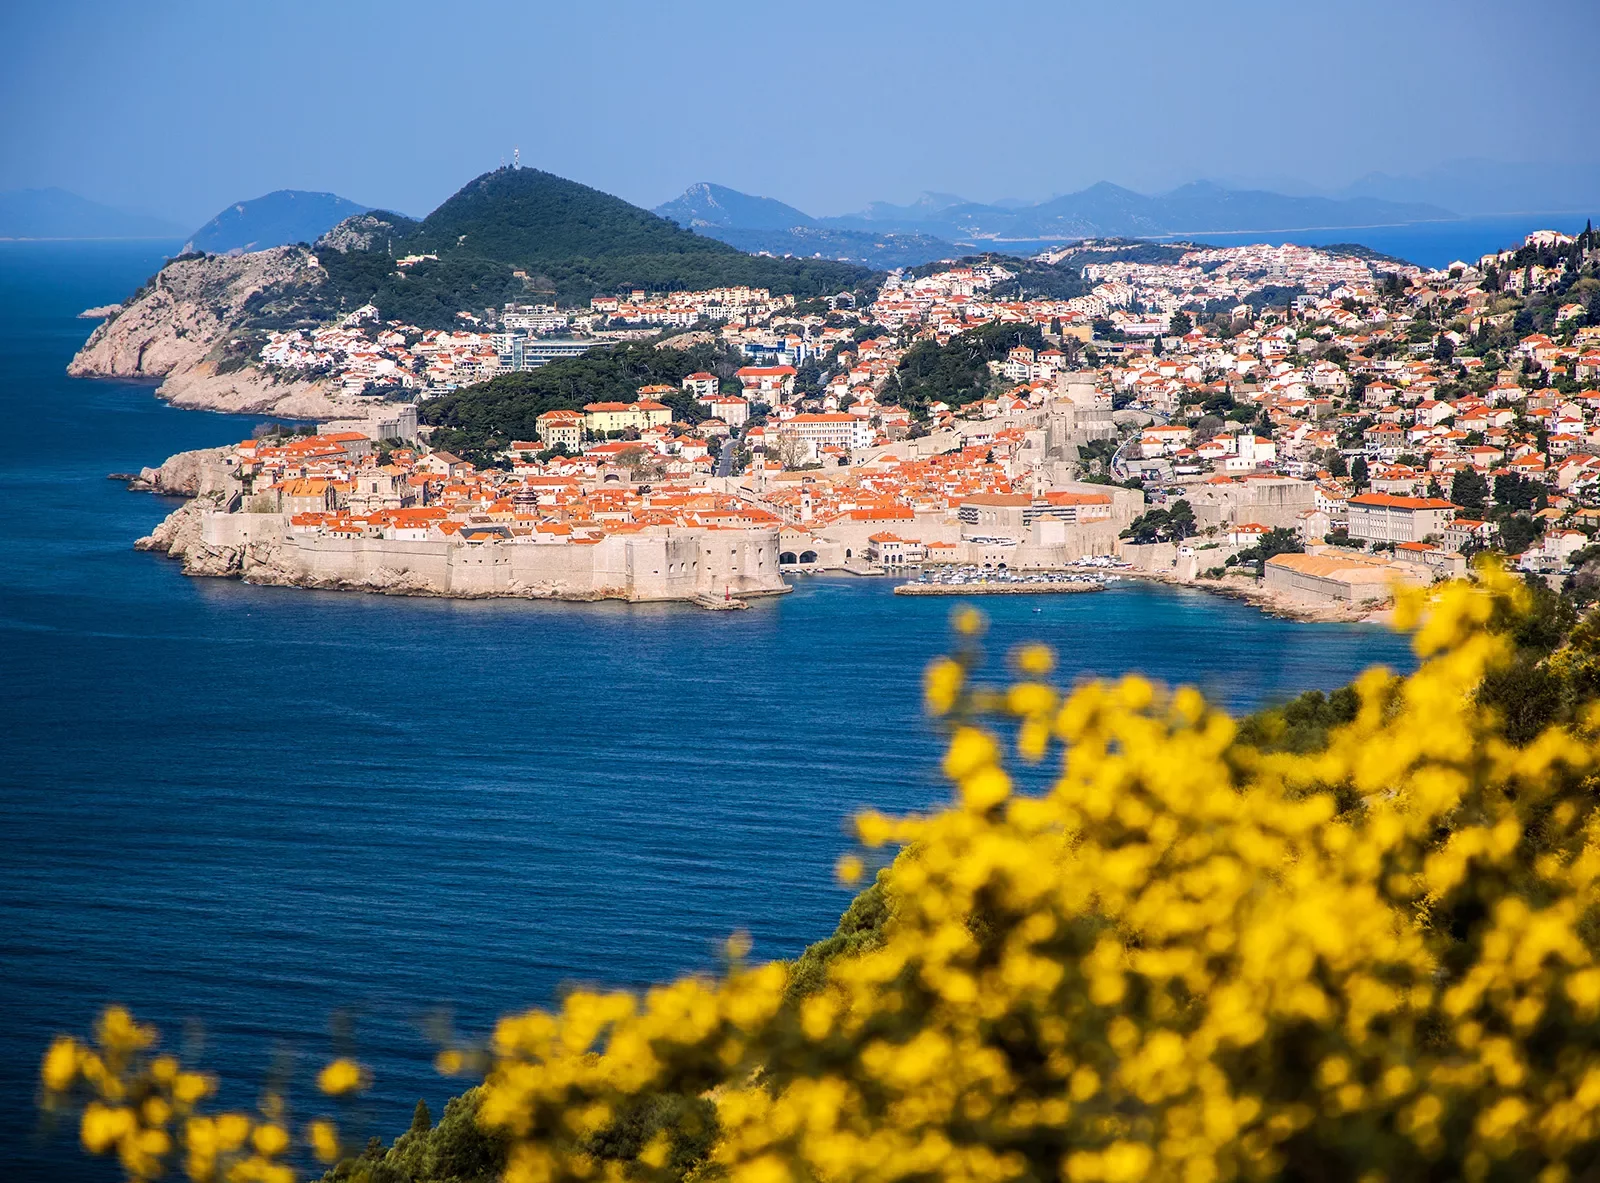 Wide shot of Dubrovnik coastline, blue ocean, white and tan houses.